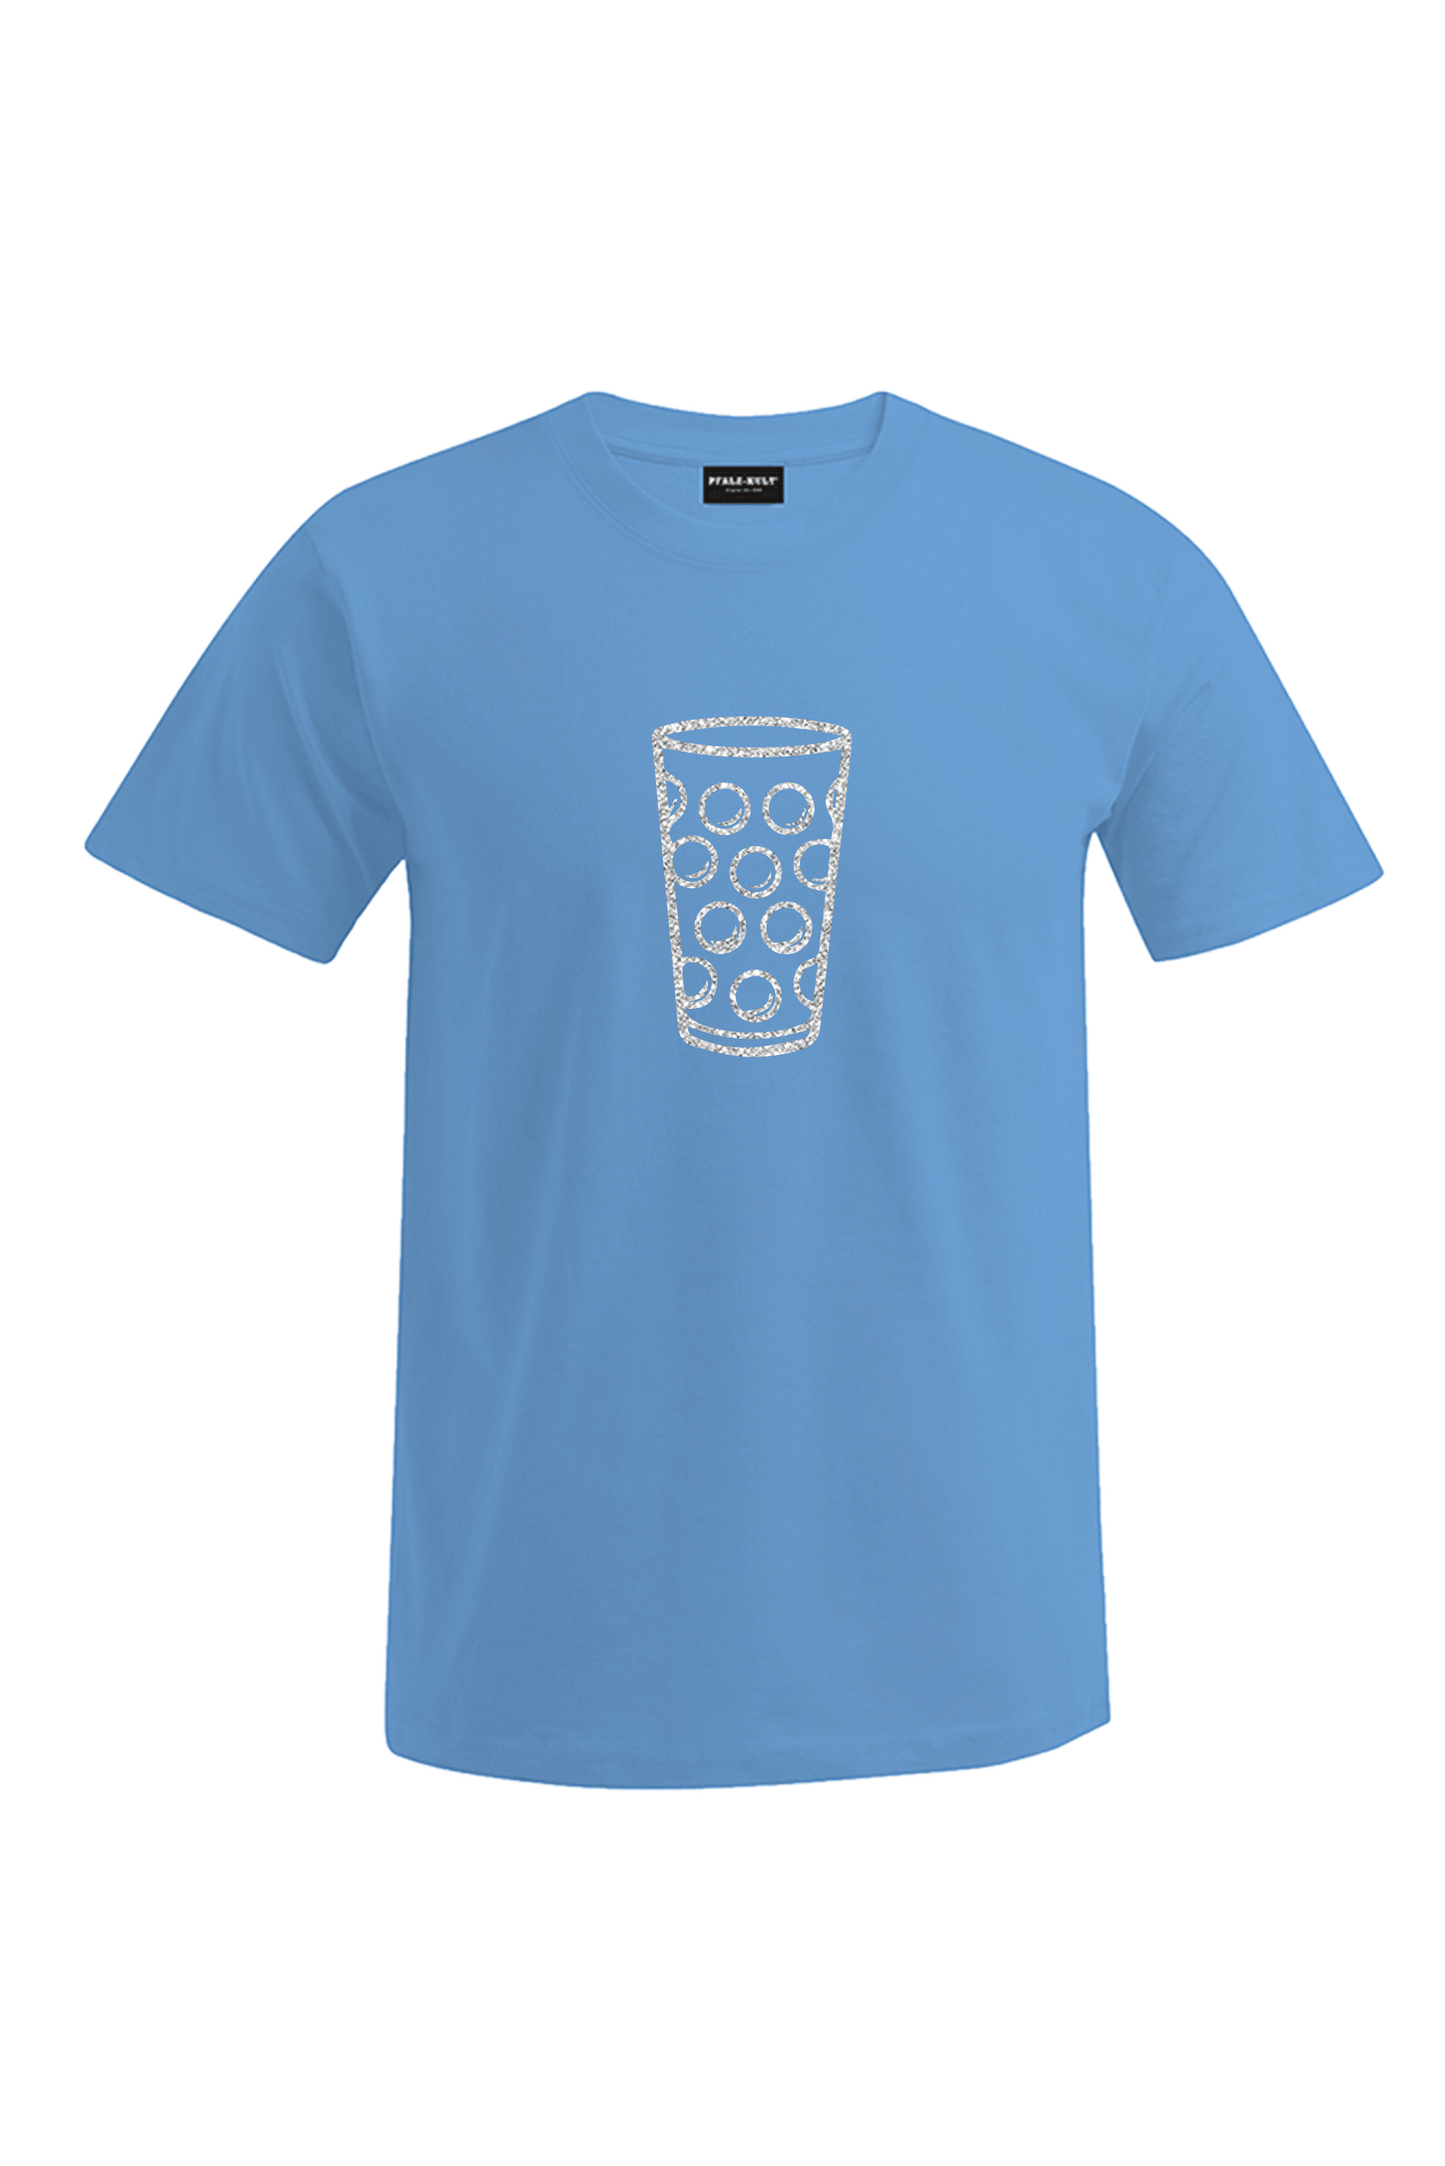 Pfälzer Dubbeglas - Silber - Männer T-Shirt - Unisex